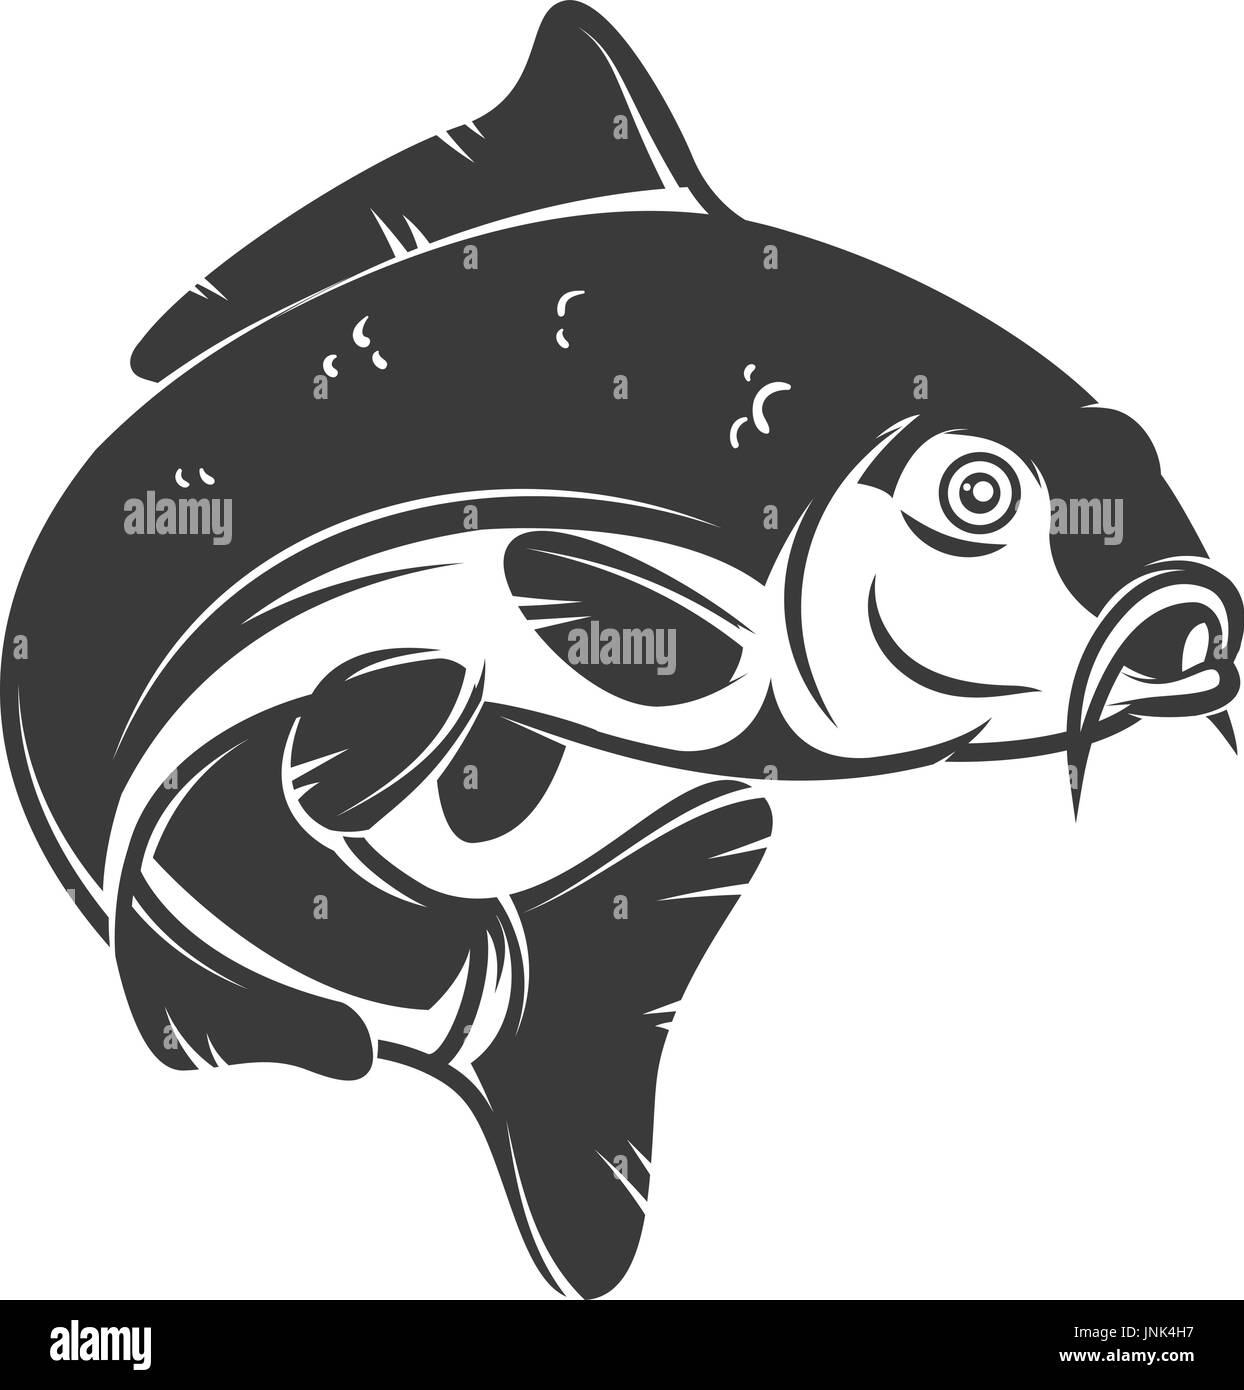 Carp fish isolated on white background. Design element for logo, emblem, sign, brand mark.  Vector illustration Stock Vector